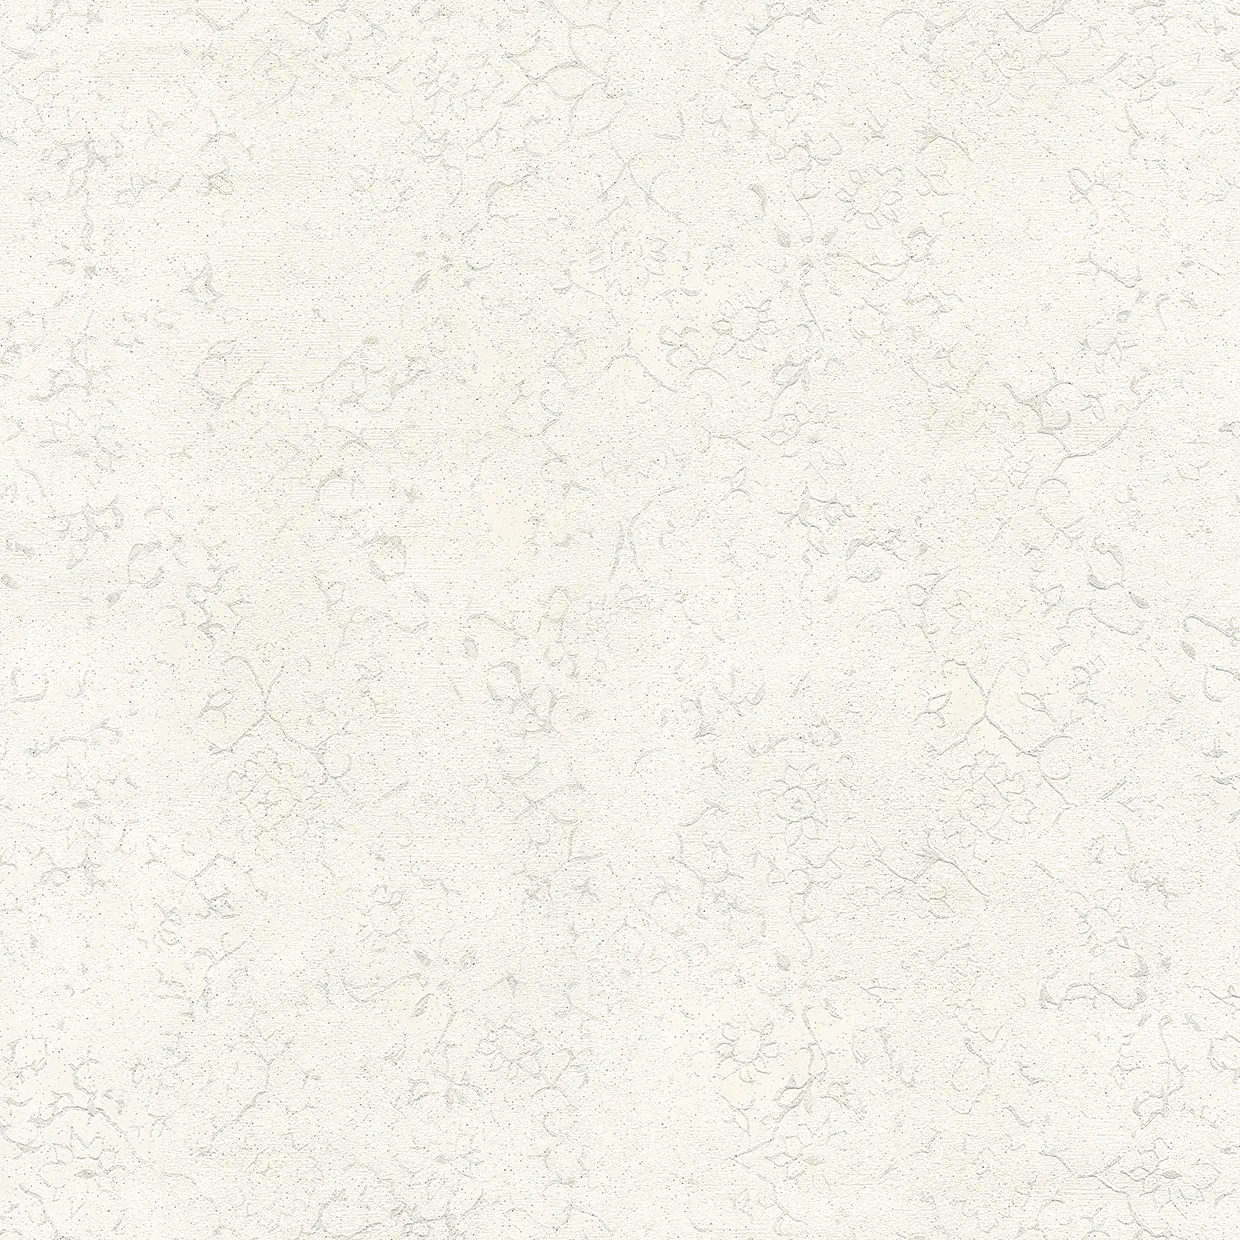 کاغذ دیواری طرح نقش و نگار کد 6053